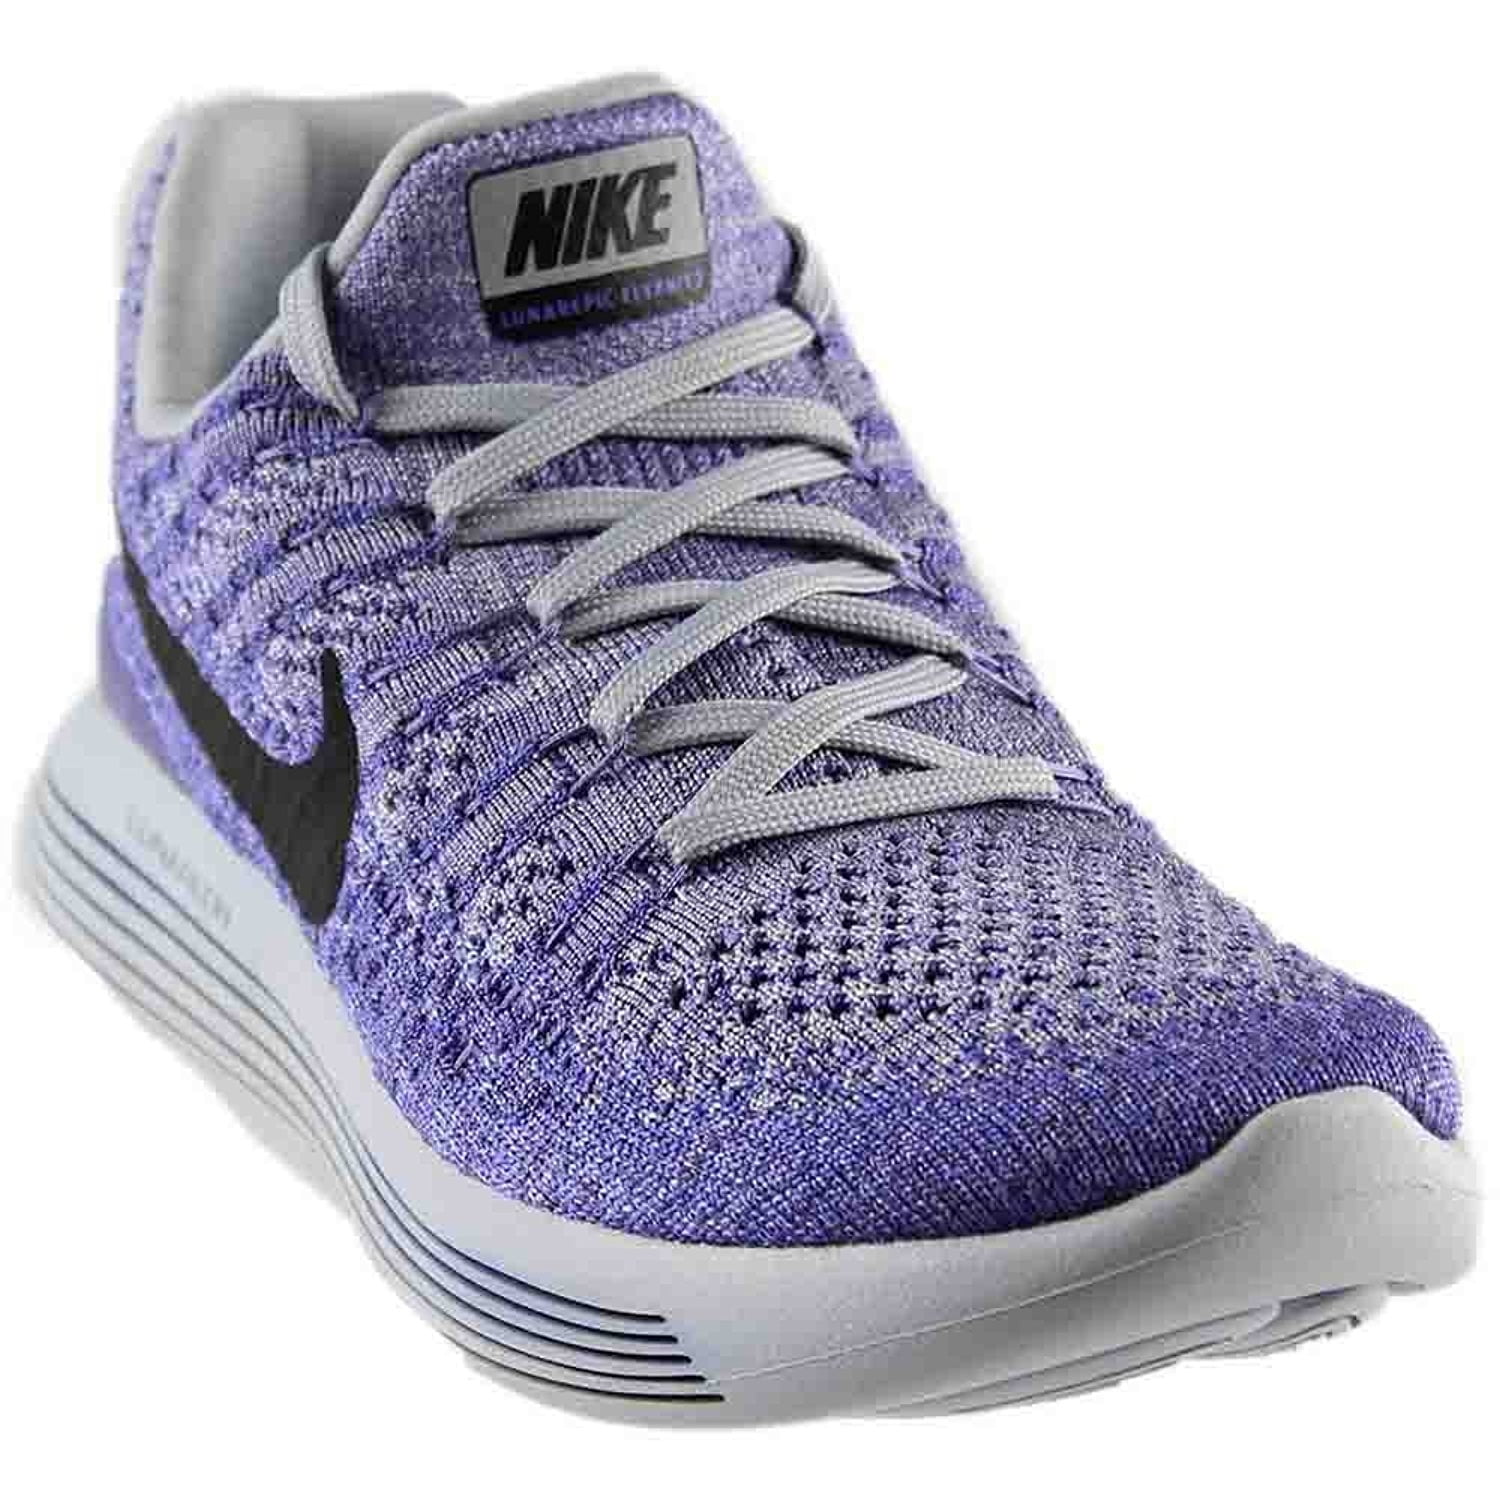 Colector trigo llenar Nike LunarEpic Low Flyknit 2 Women Wolf Grey/Purple Earth 863780-007 (7.5)  - Walmart.com